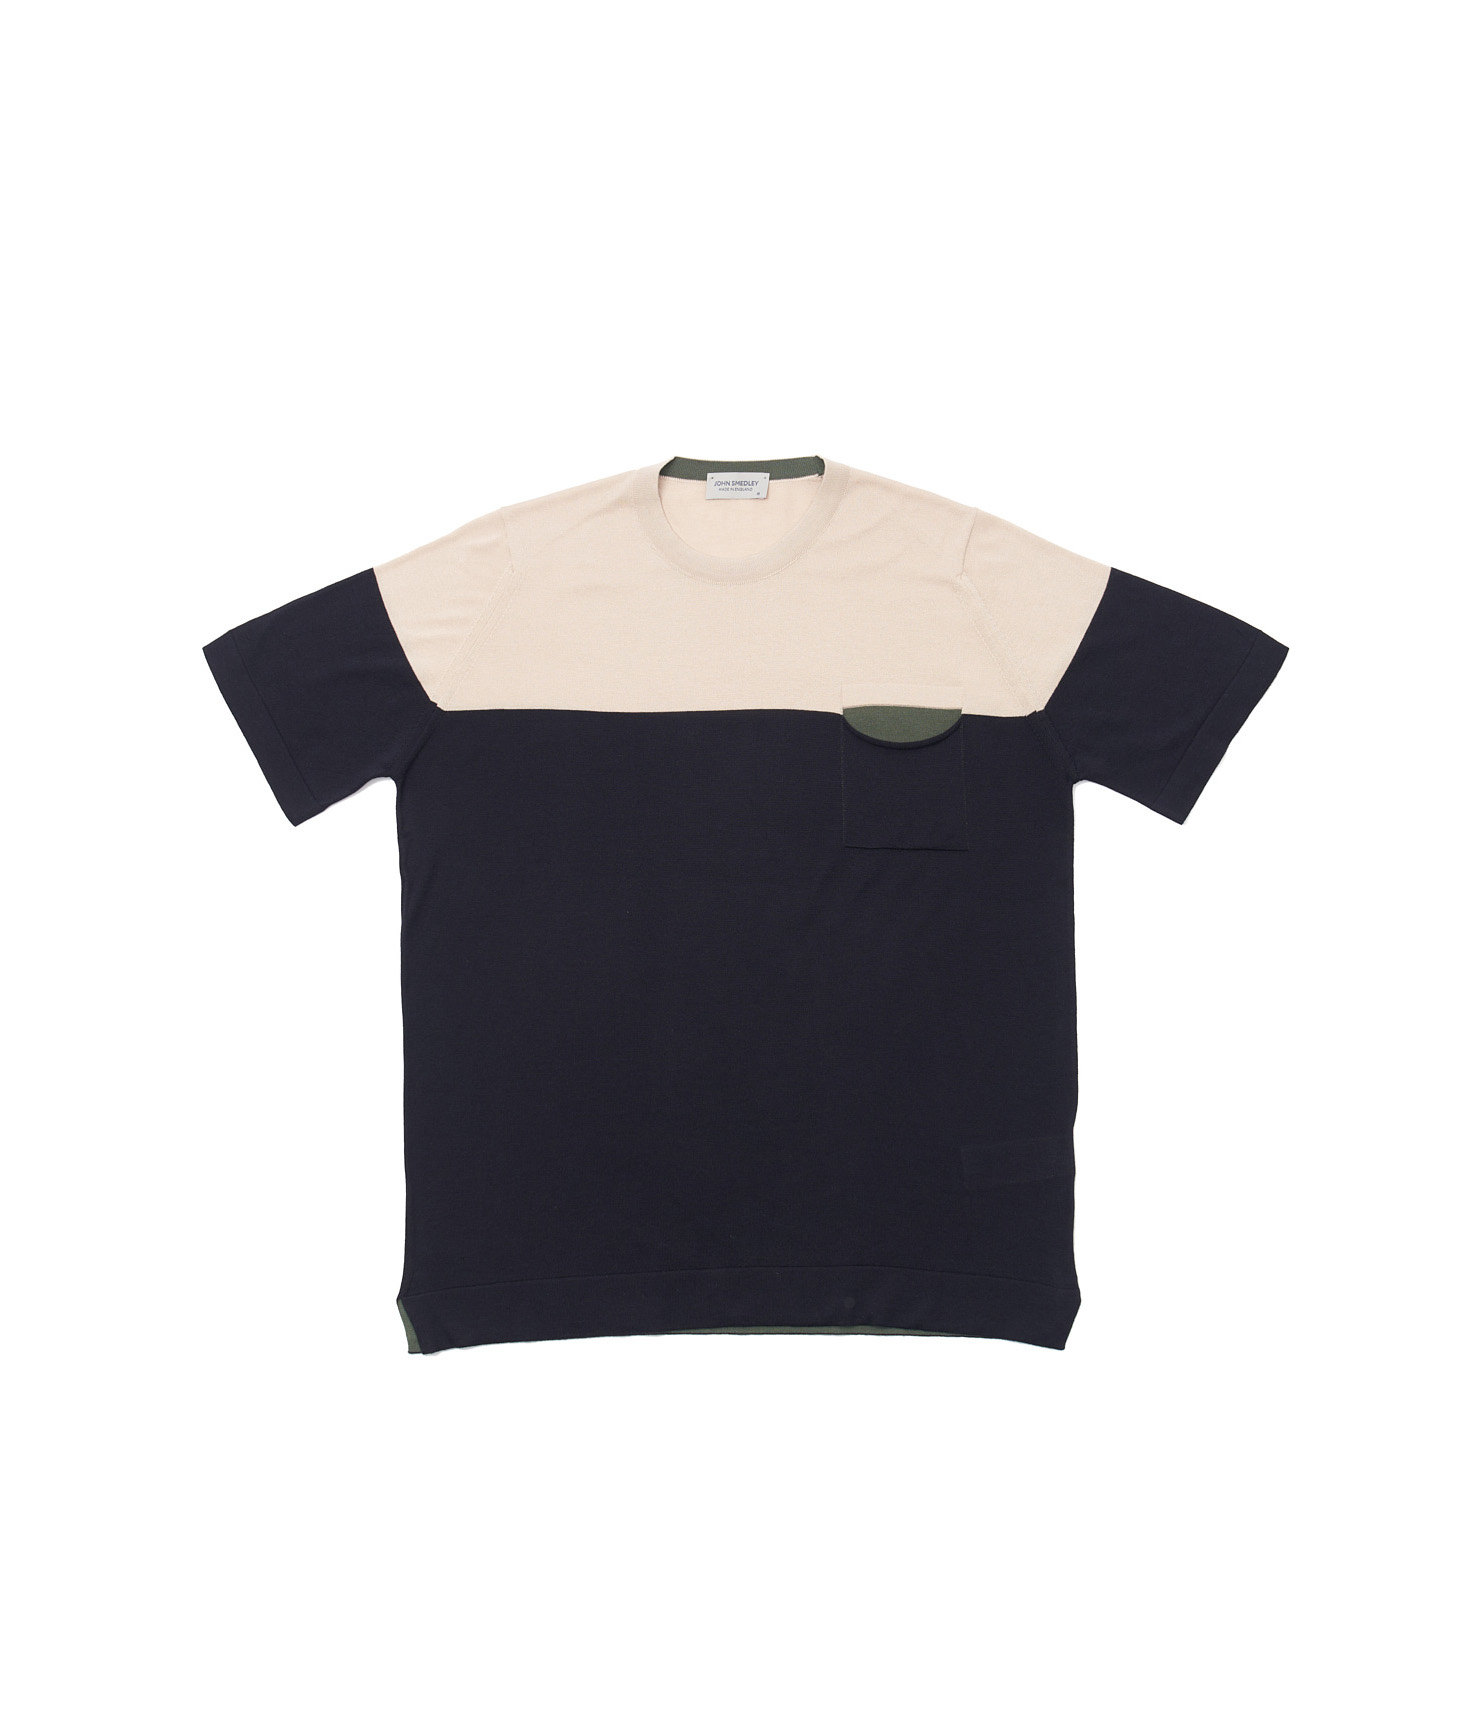 Reynolds T-Shirt Navy/Almond/Palm